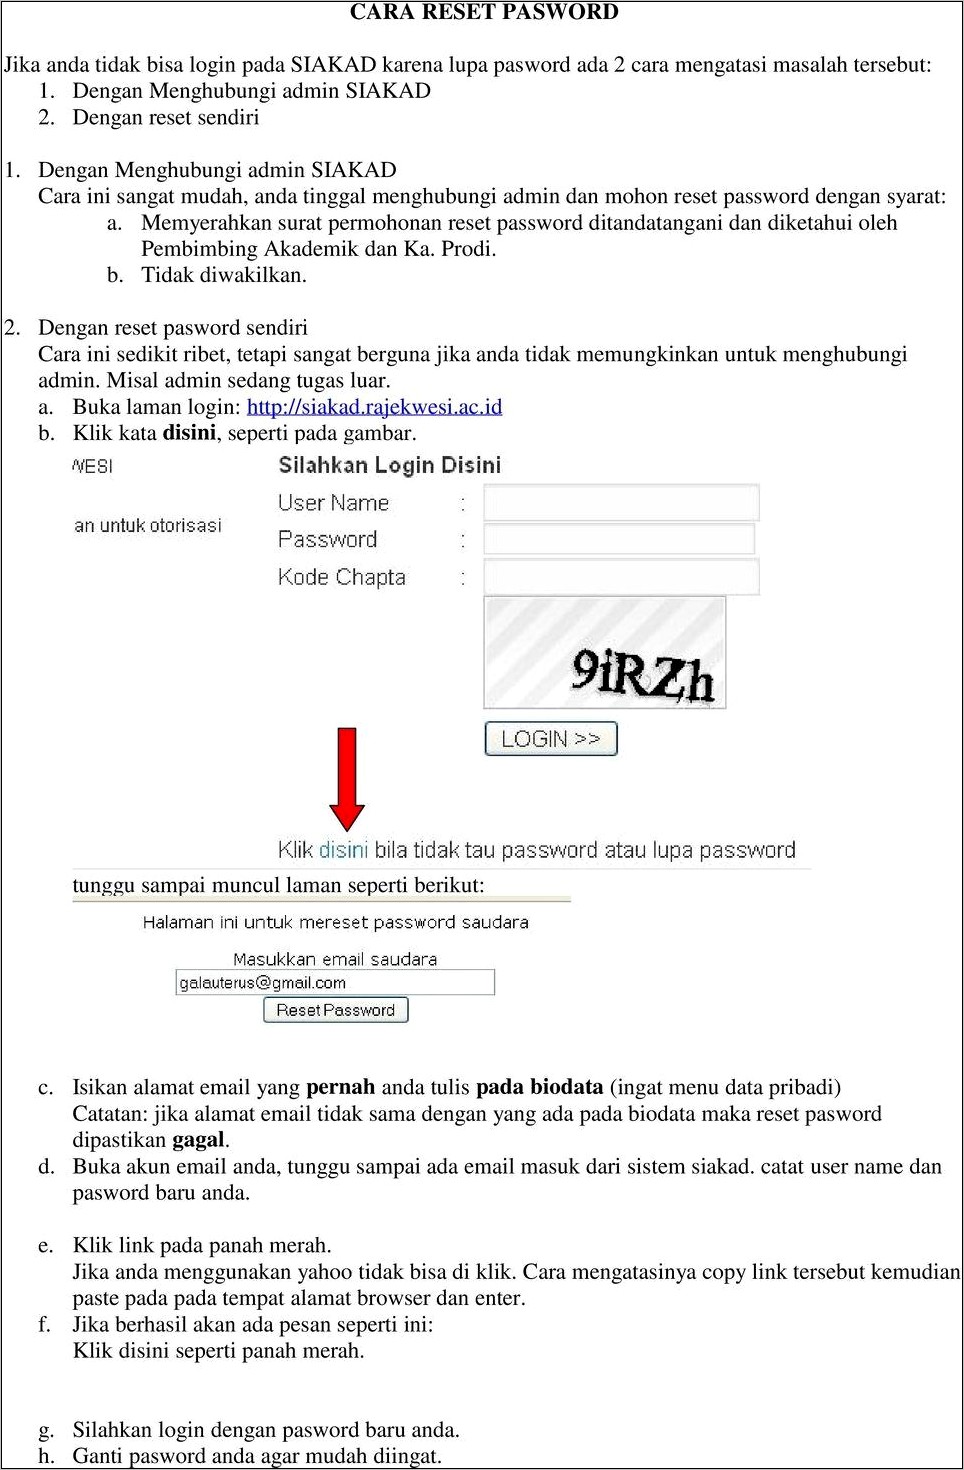 Contoh Surat Permohonan Lupa Password